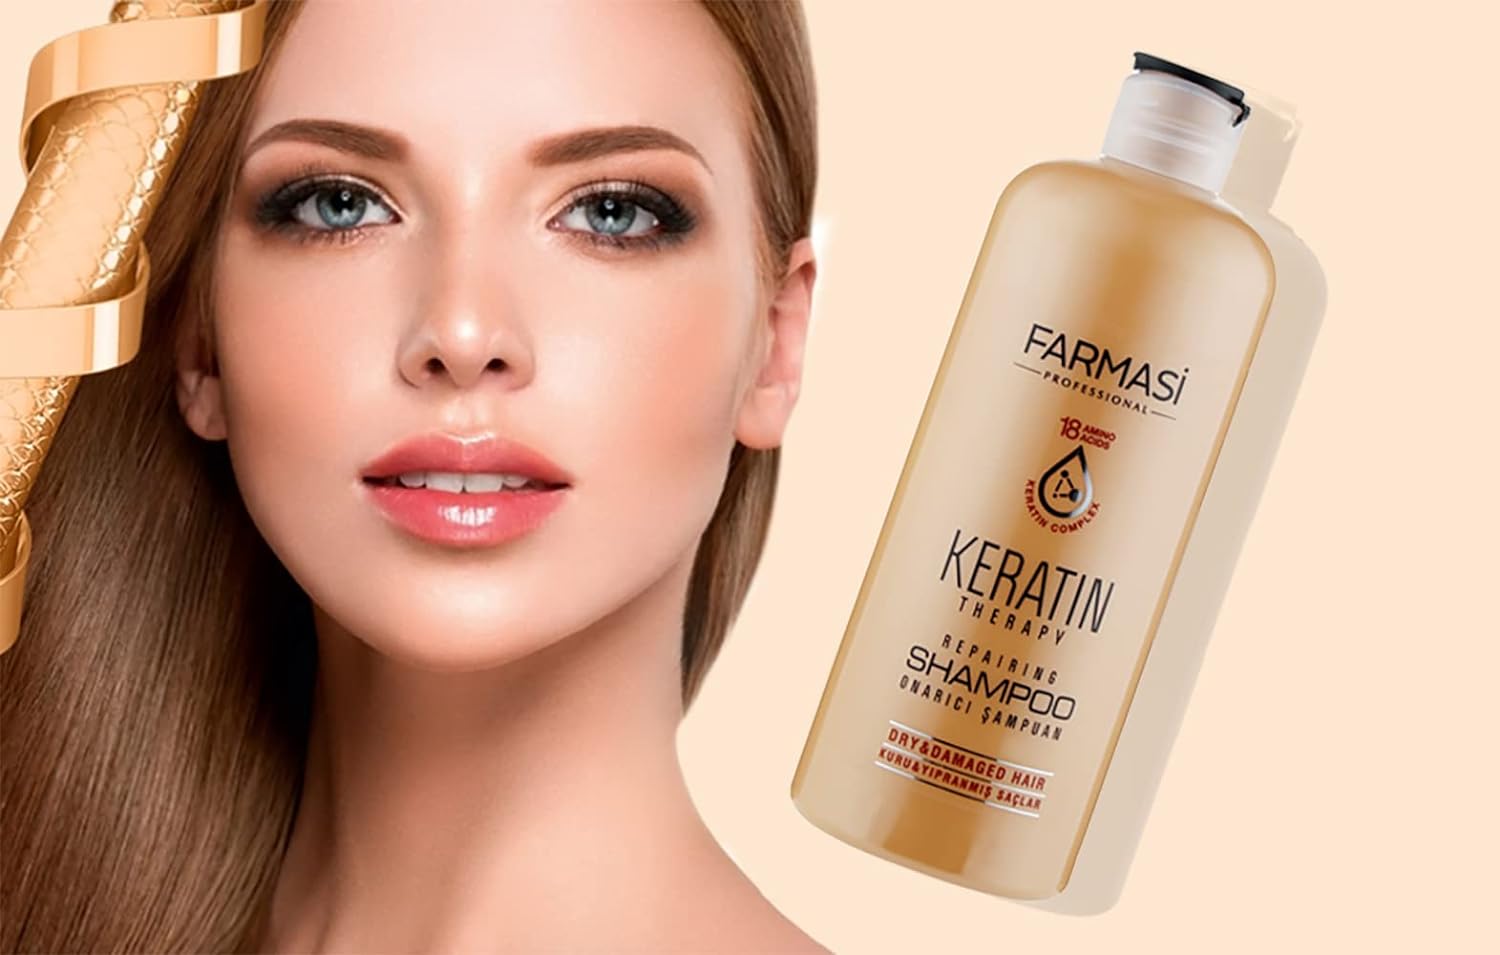 Farmasi Keratin Theraphy Repairing Shampoo for Dry and Damaged Hair (360ml)